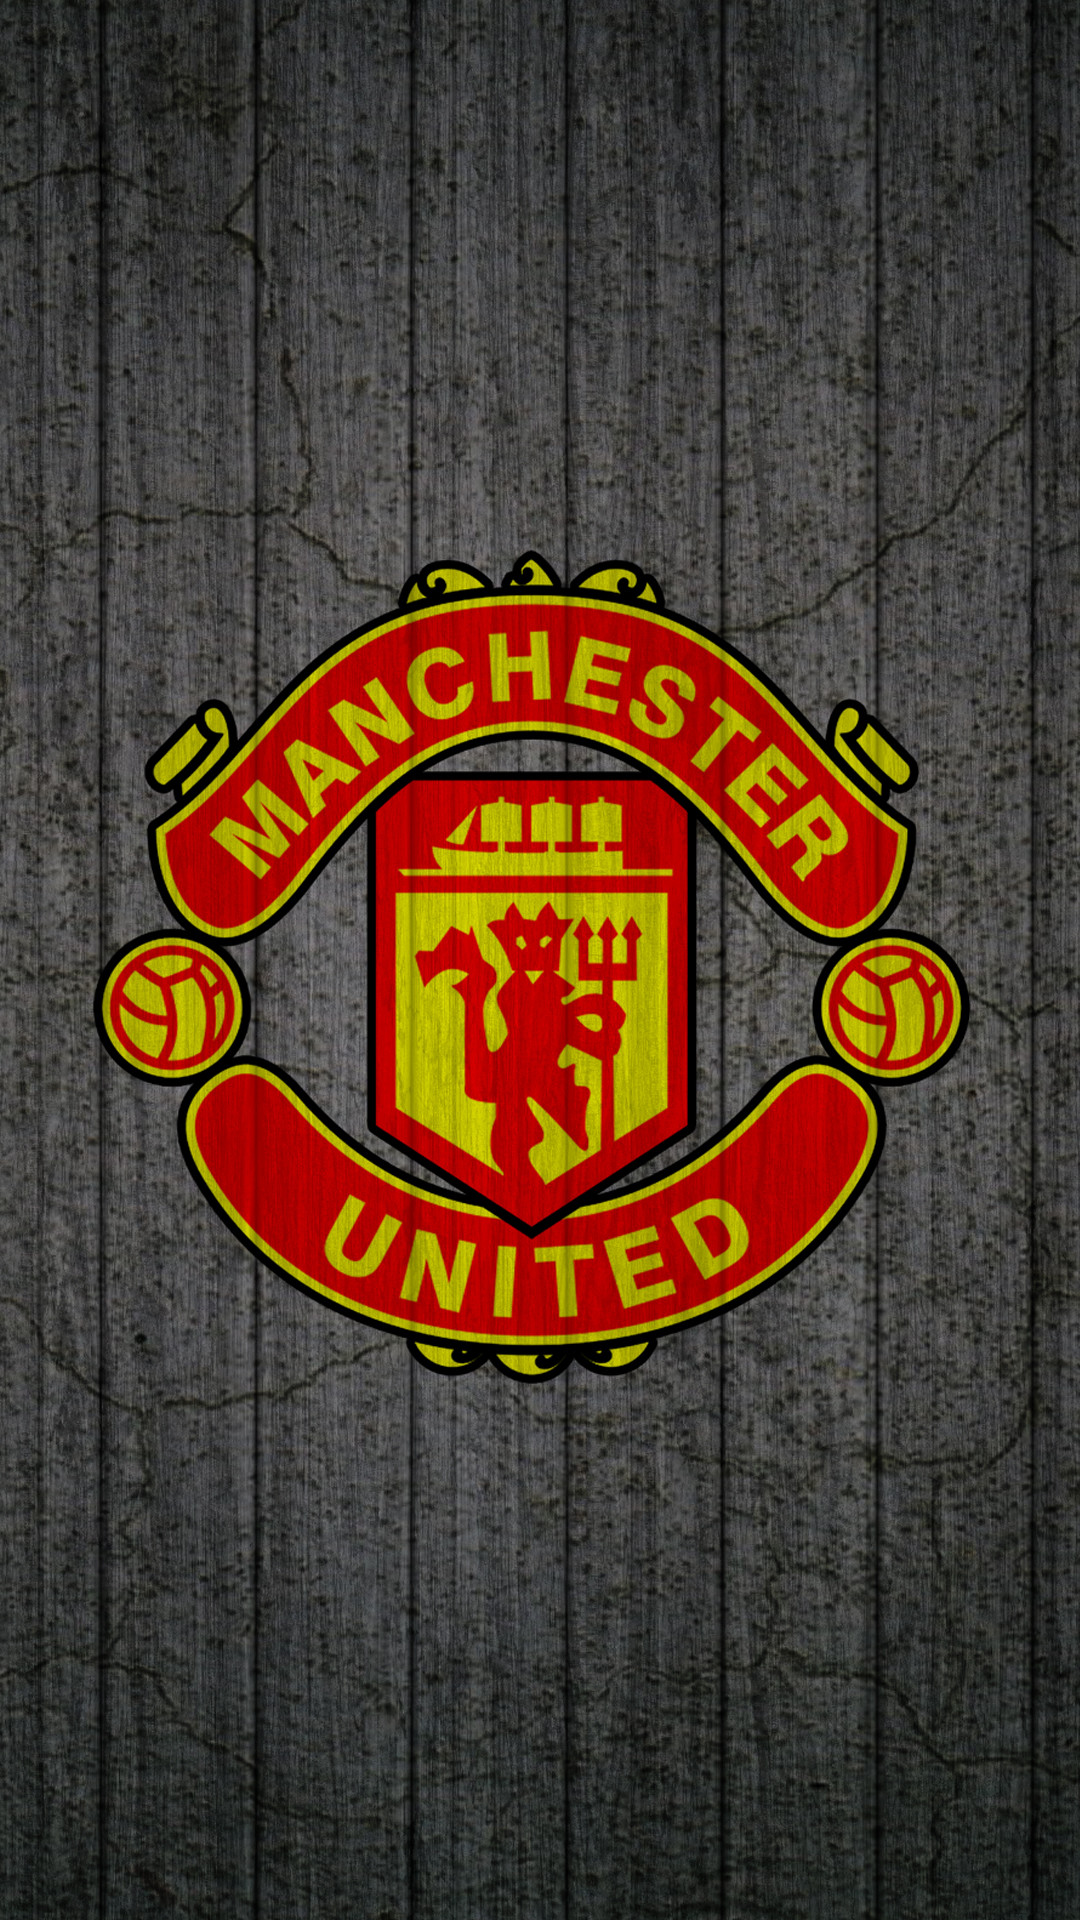 1080x1920 Apple iPhone 6 Plus HD Wallpaper – Manchester United Logo | HD Wallpaper  Download for Desktop